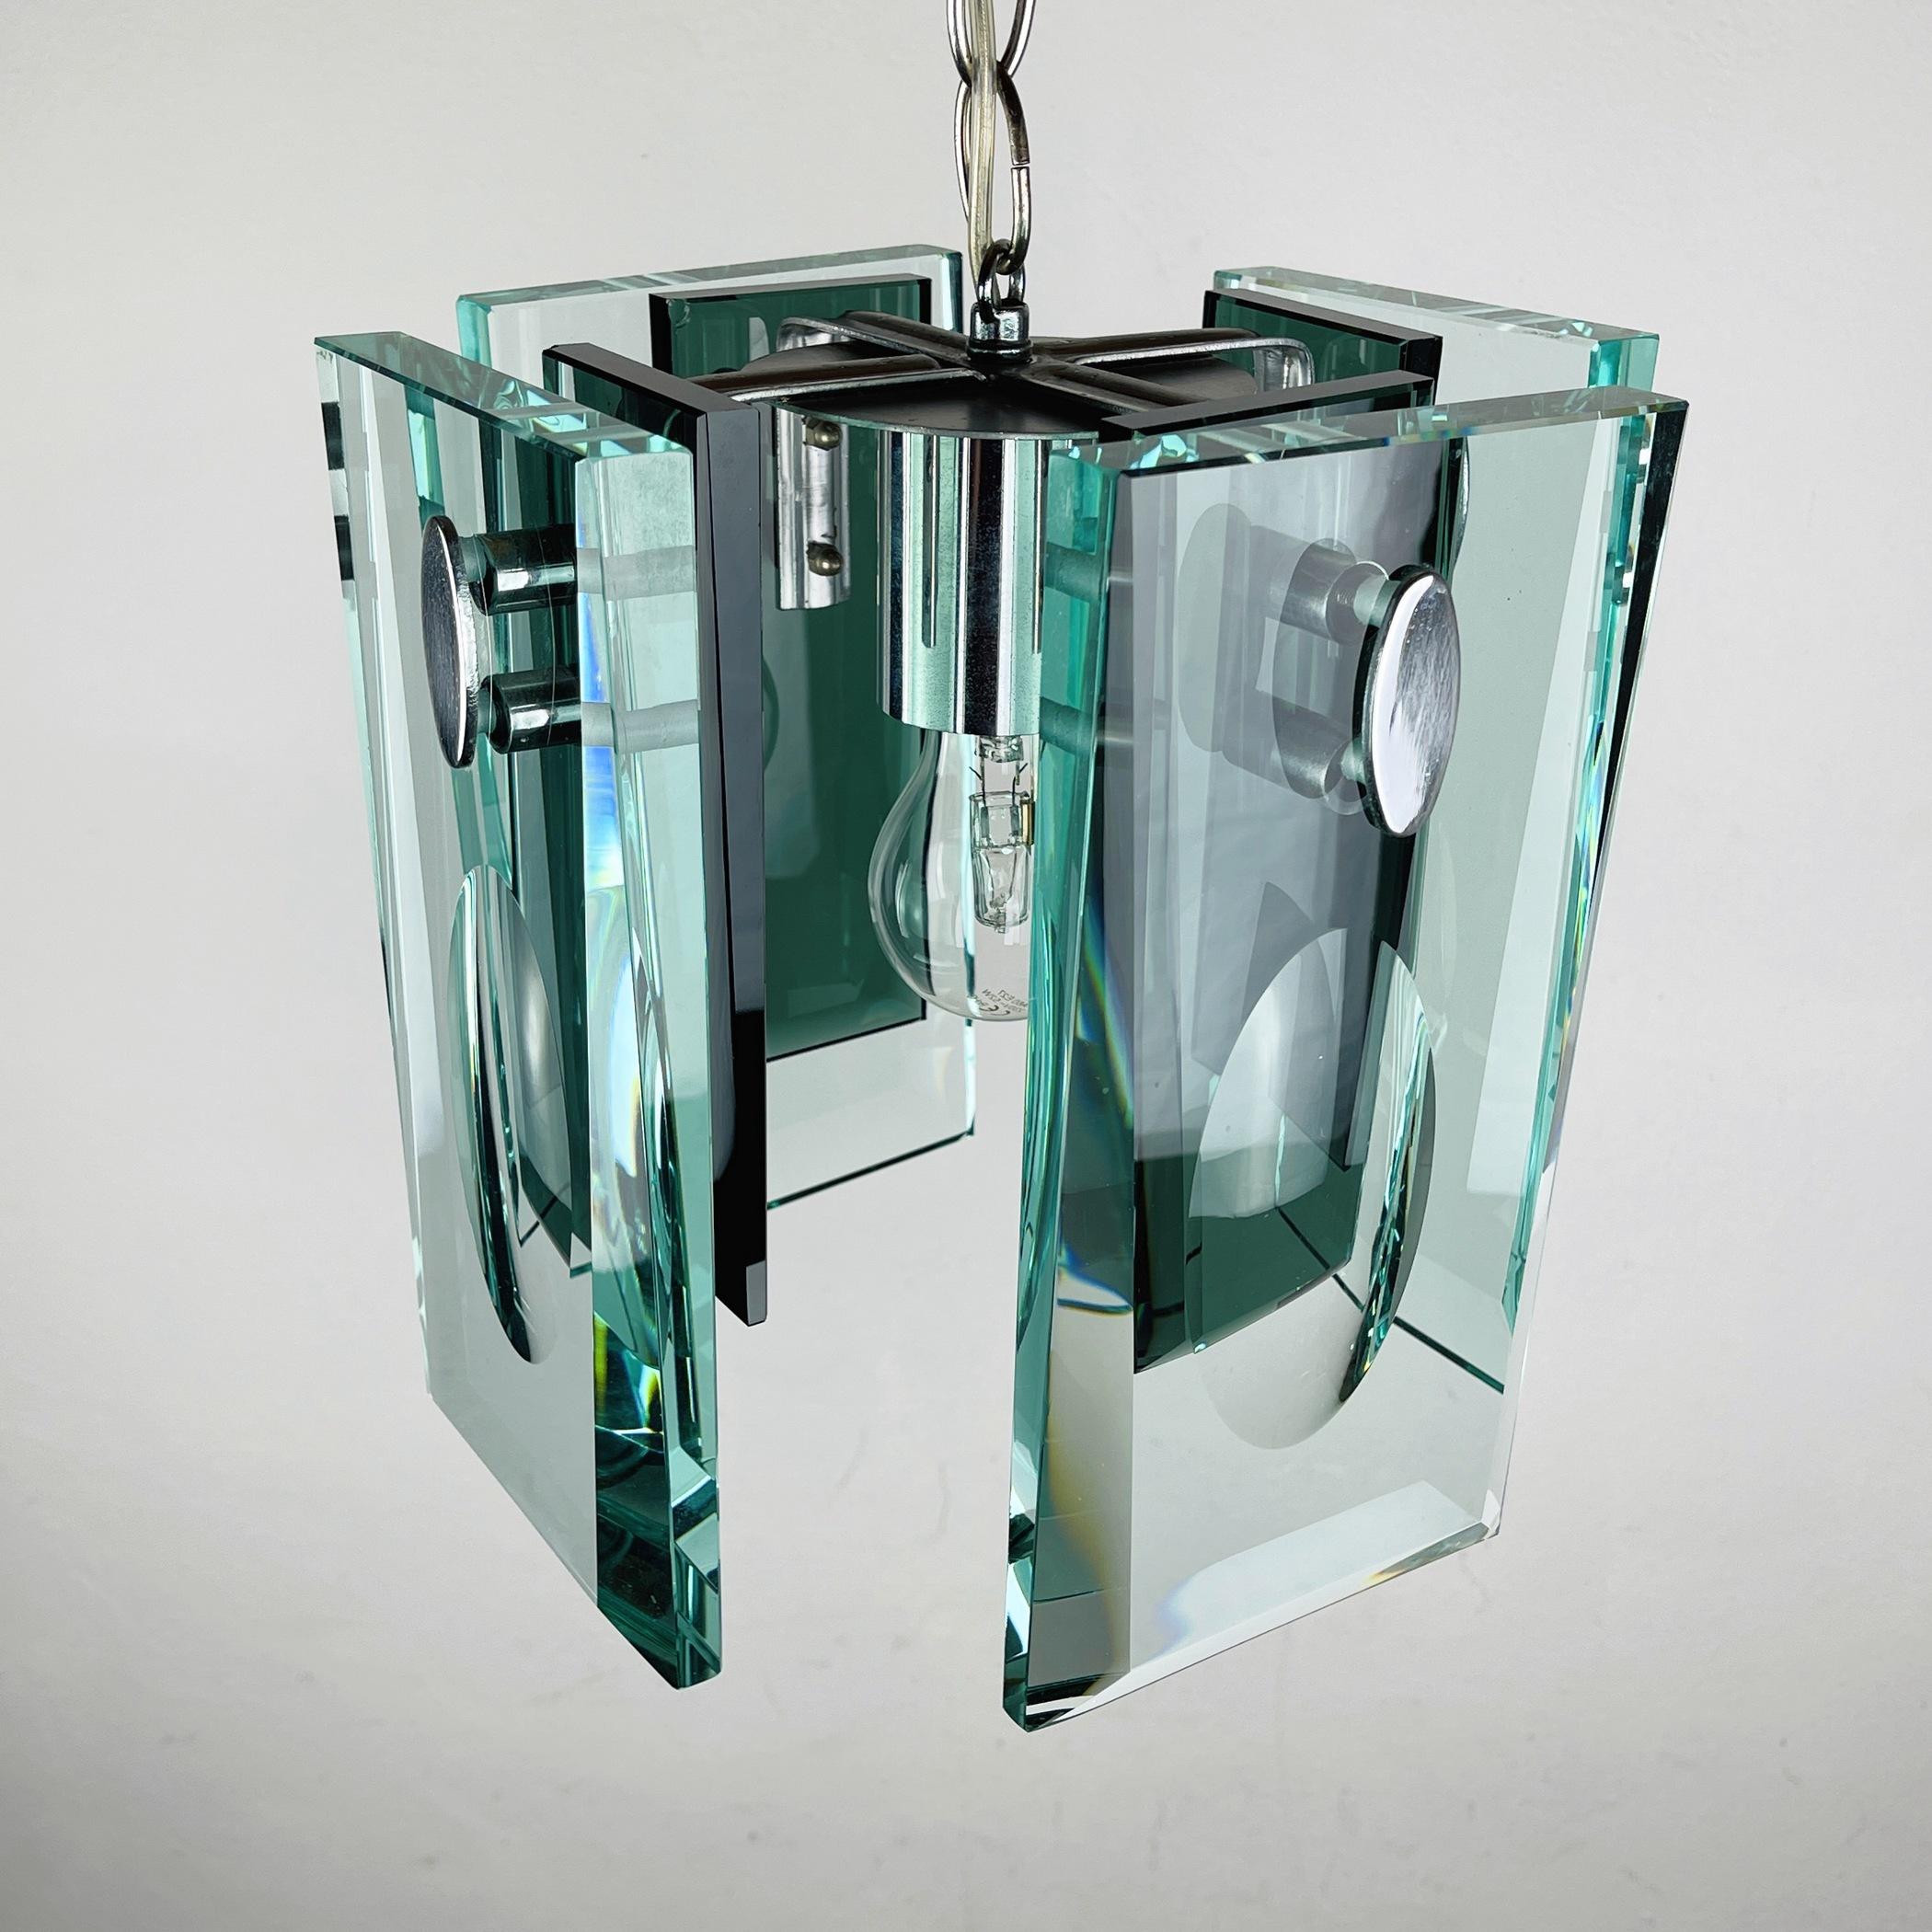 Rare Art Glass Pendant Lamp Italian Design by Fontana Arte Italy 70s For Sale 6